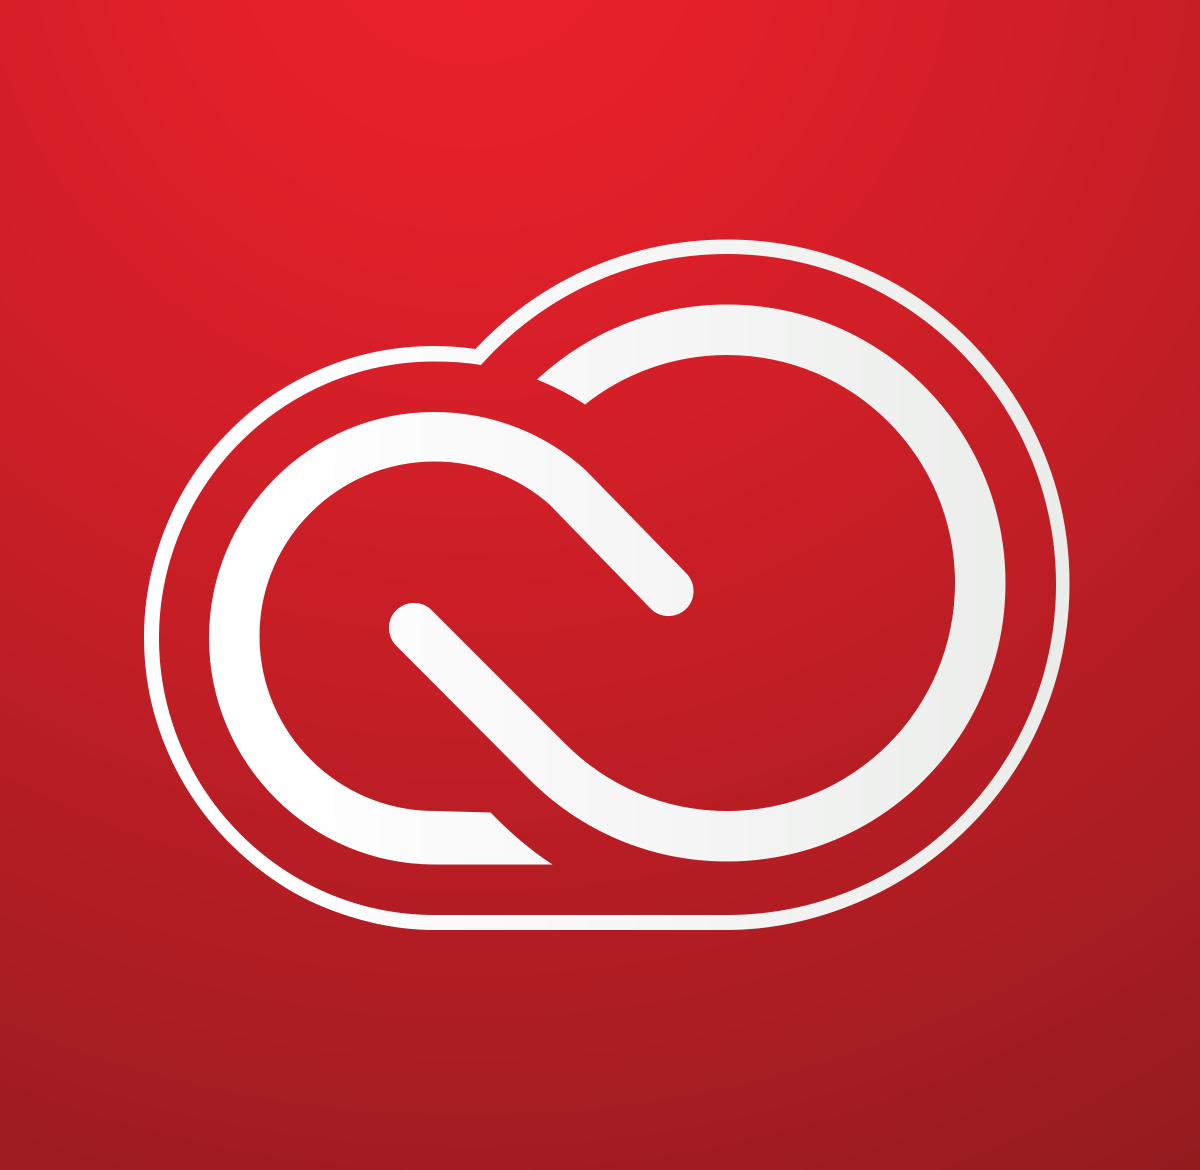 Adobe PDF Logo - Adobe Creative Cloud